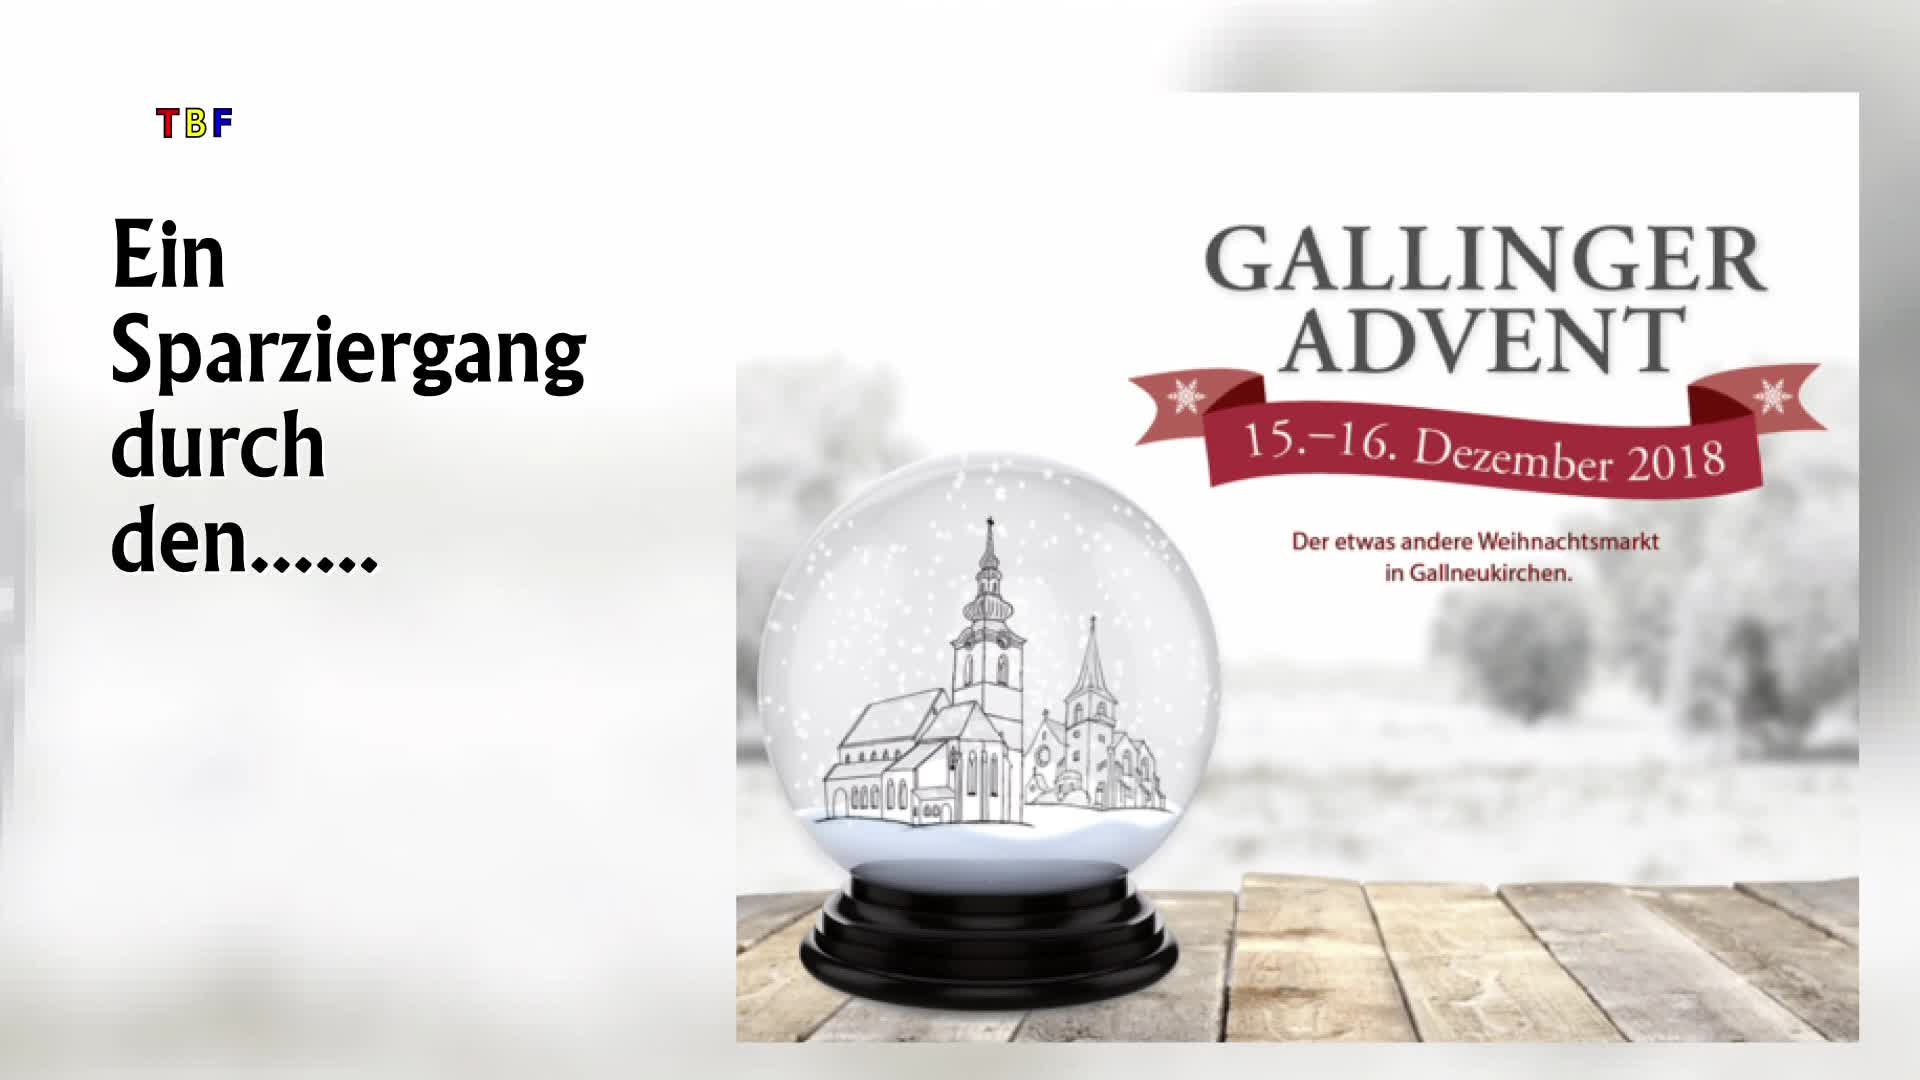 Gallinger Advent 2018